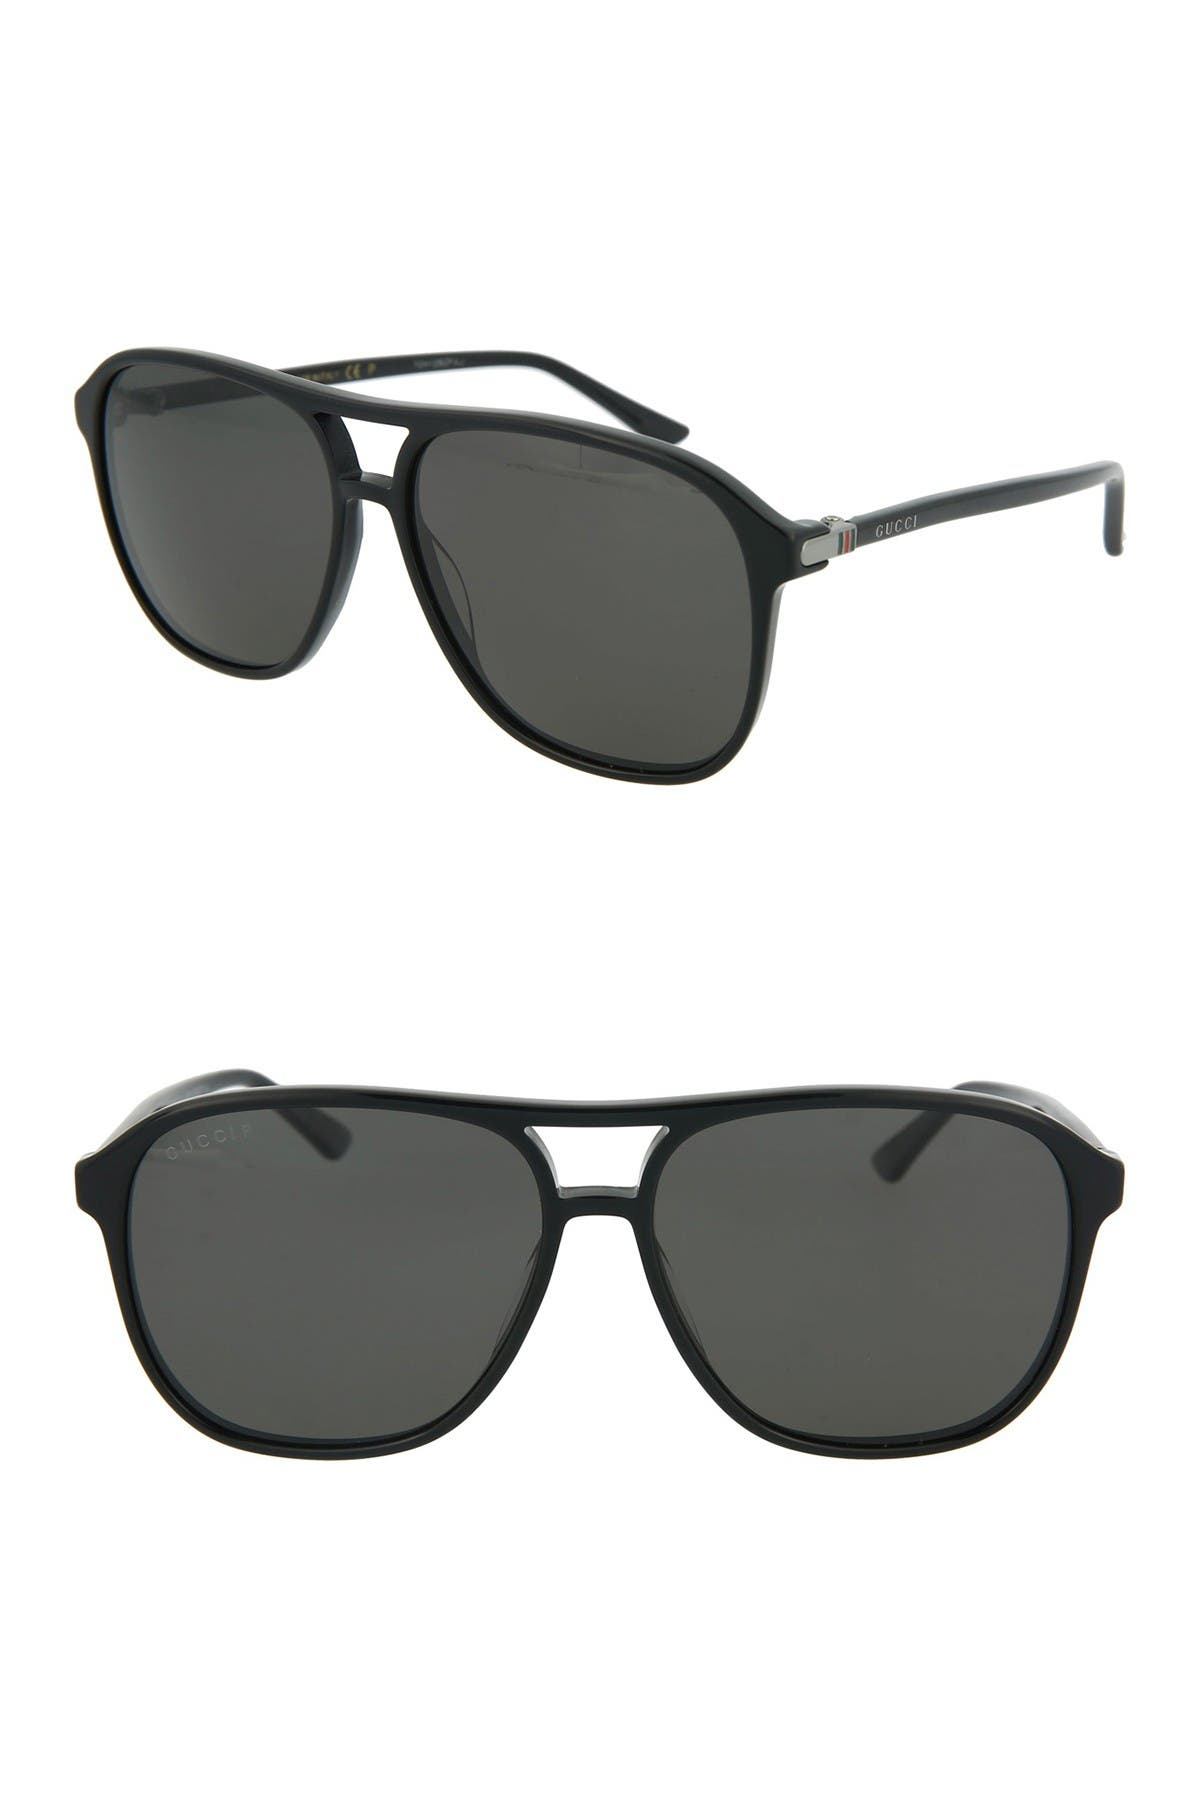 gucci 58mm sunglasses